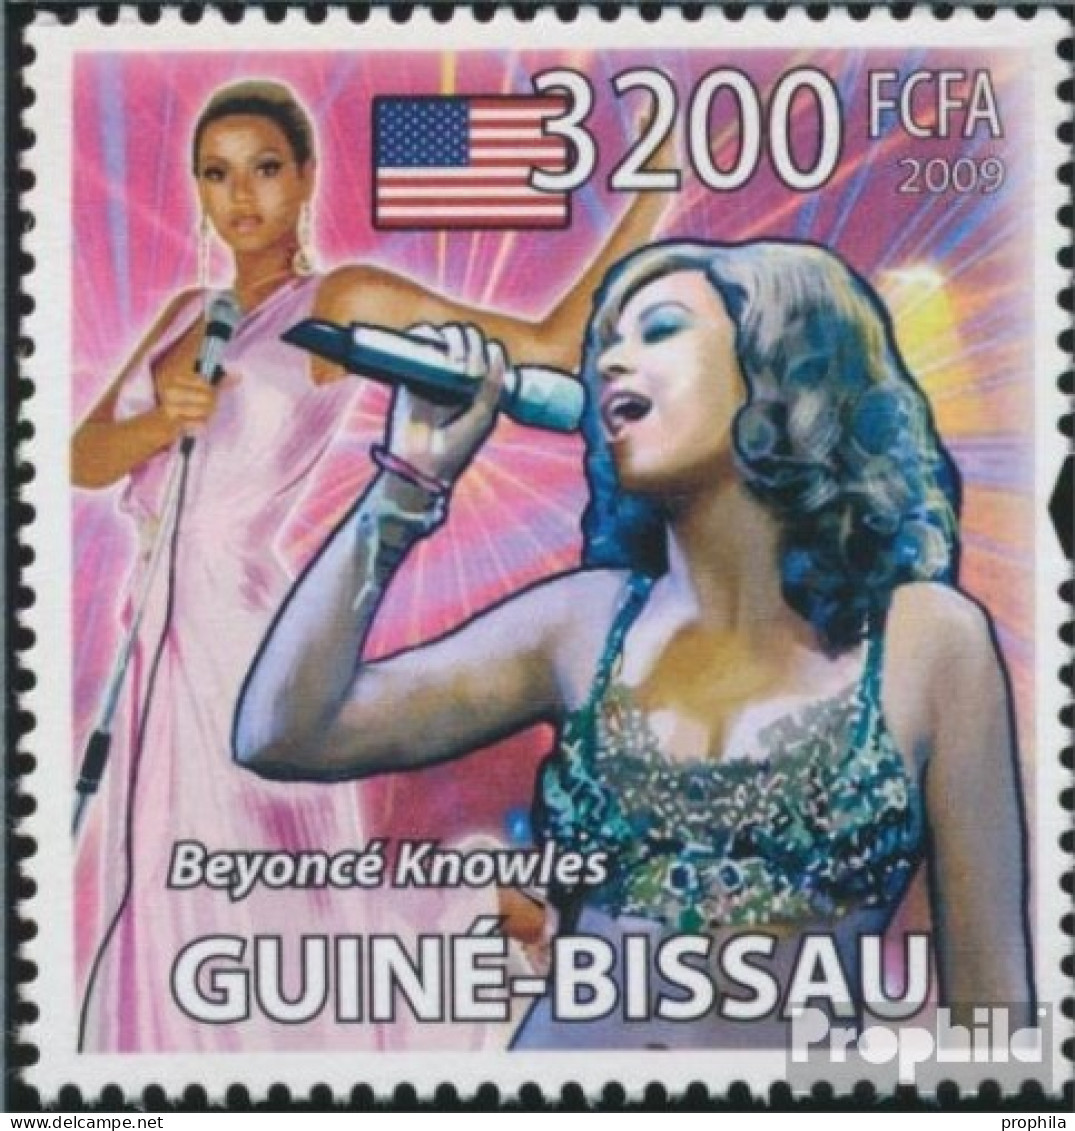 Guinea-Bissau 4413 (kompl. Ausgabe) Postfrisch 2009 Berühmte Musiker - Guinea-Bissau